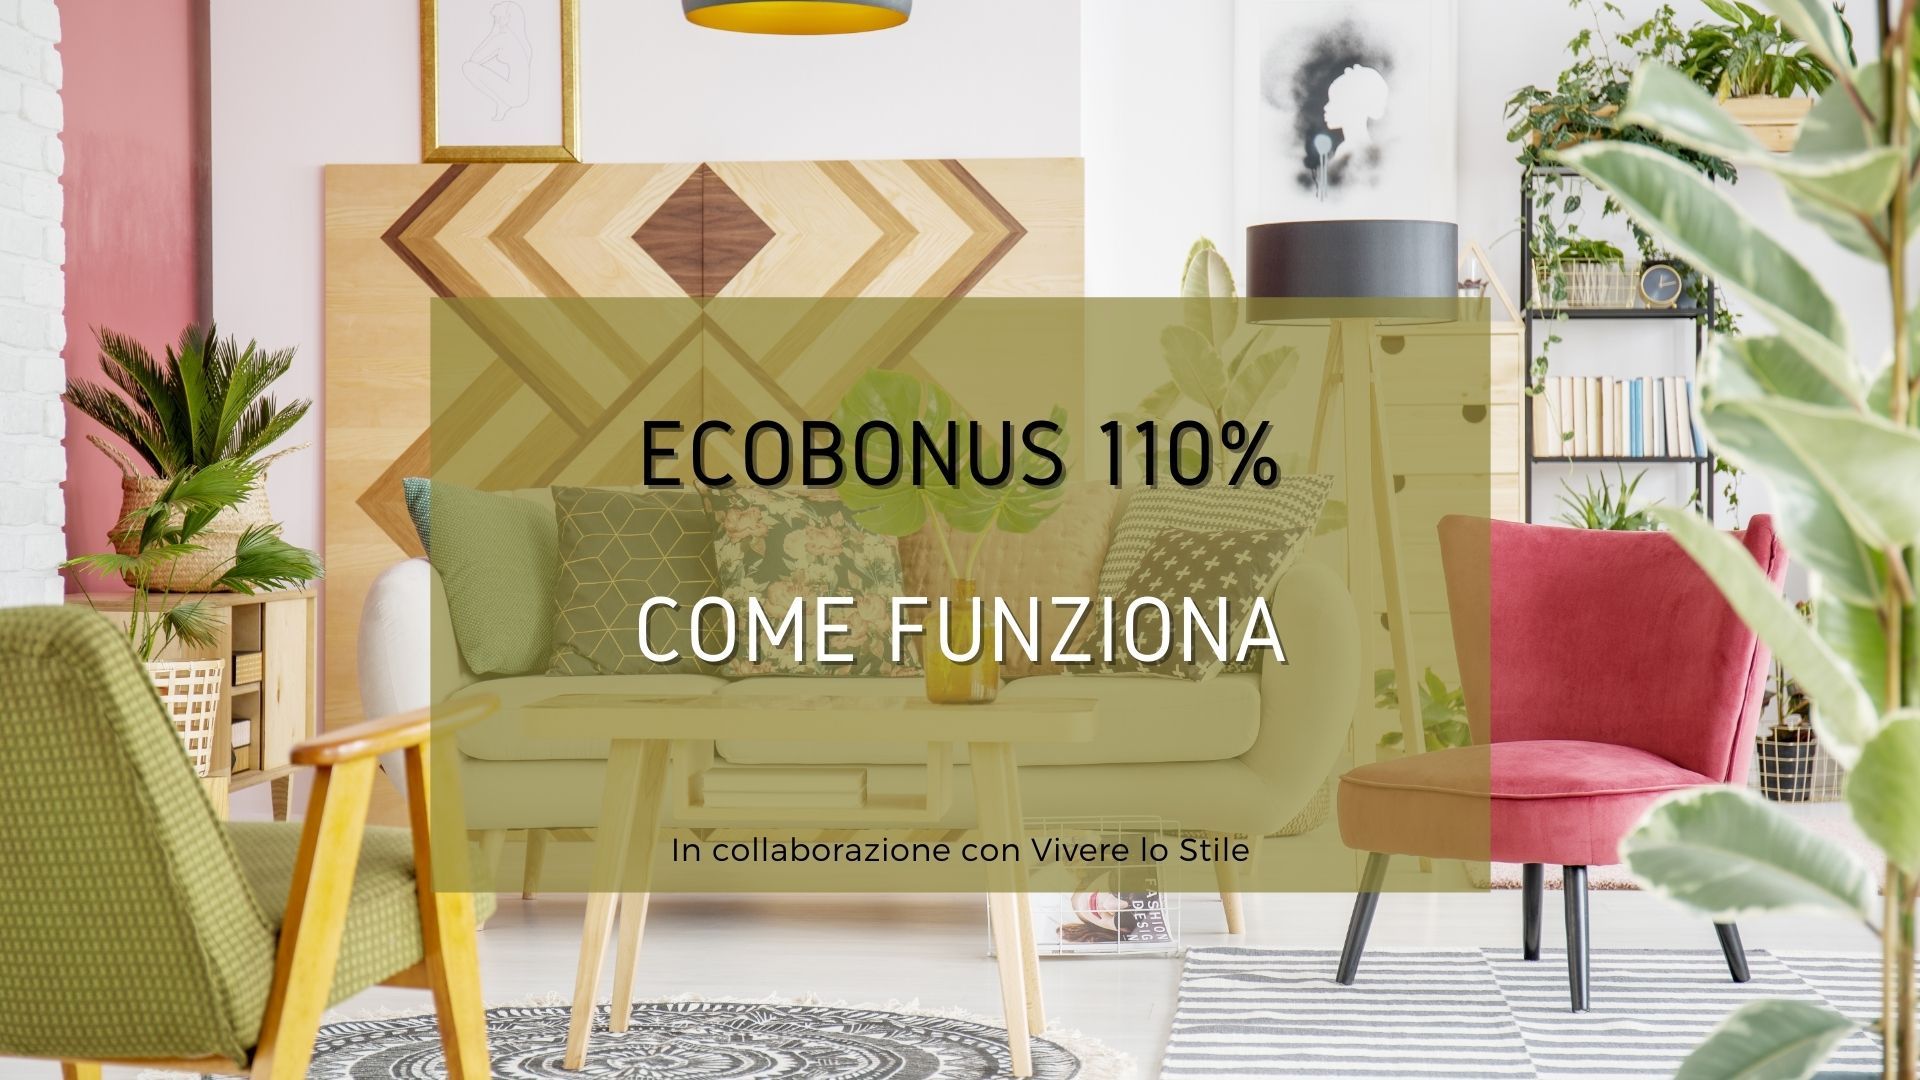 Ecobonus 110 per cento